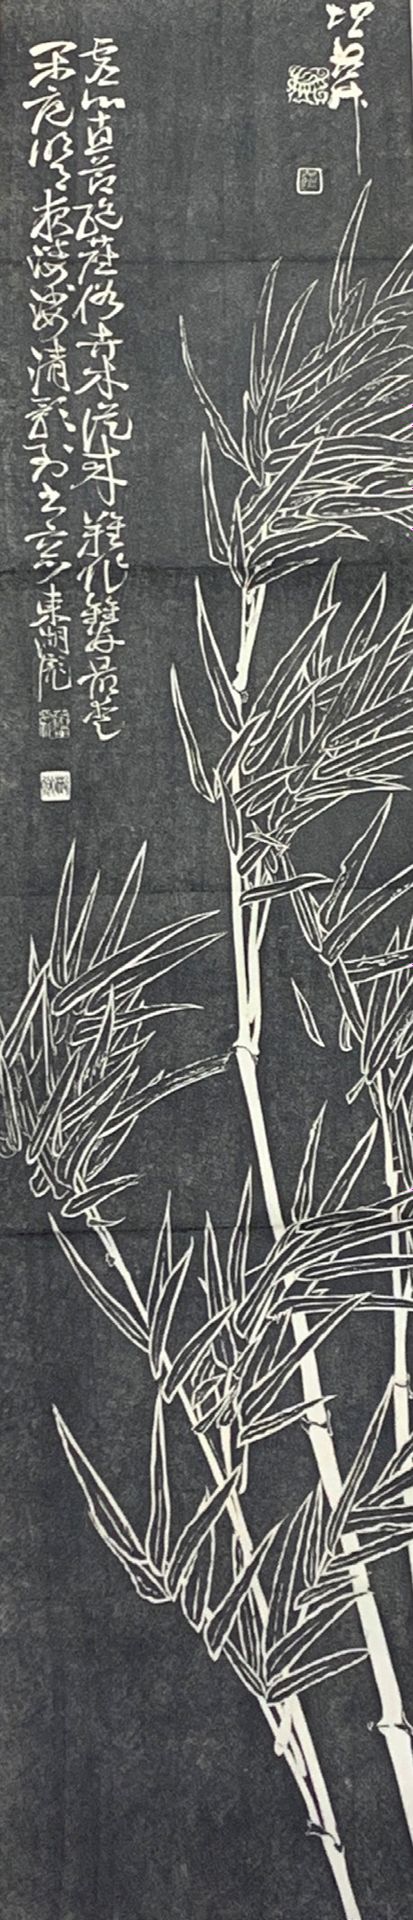 JAPON Kakemono print.
Black print on paper representing three bamboos with inscr&hellip;